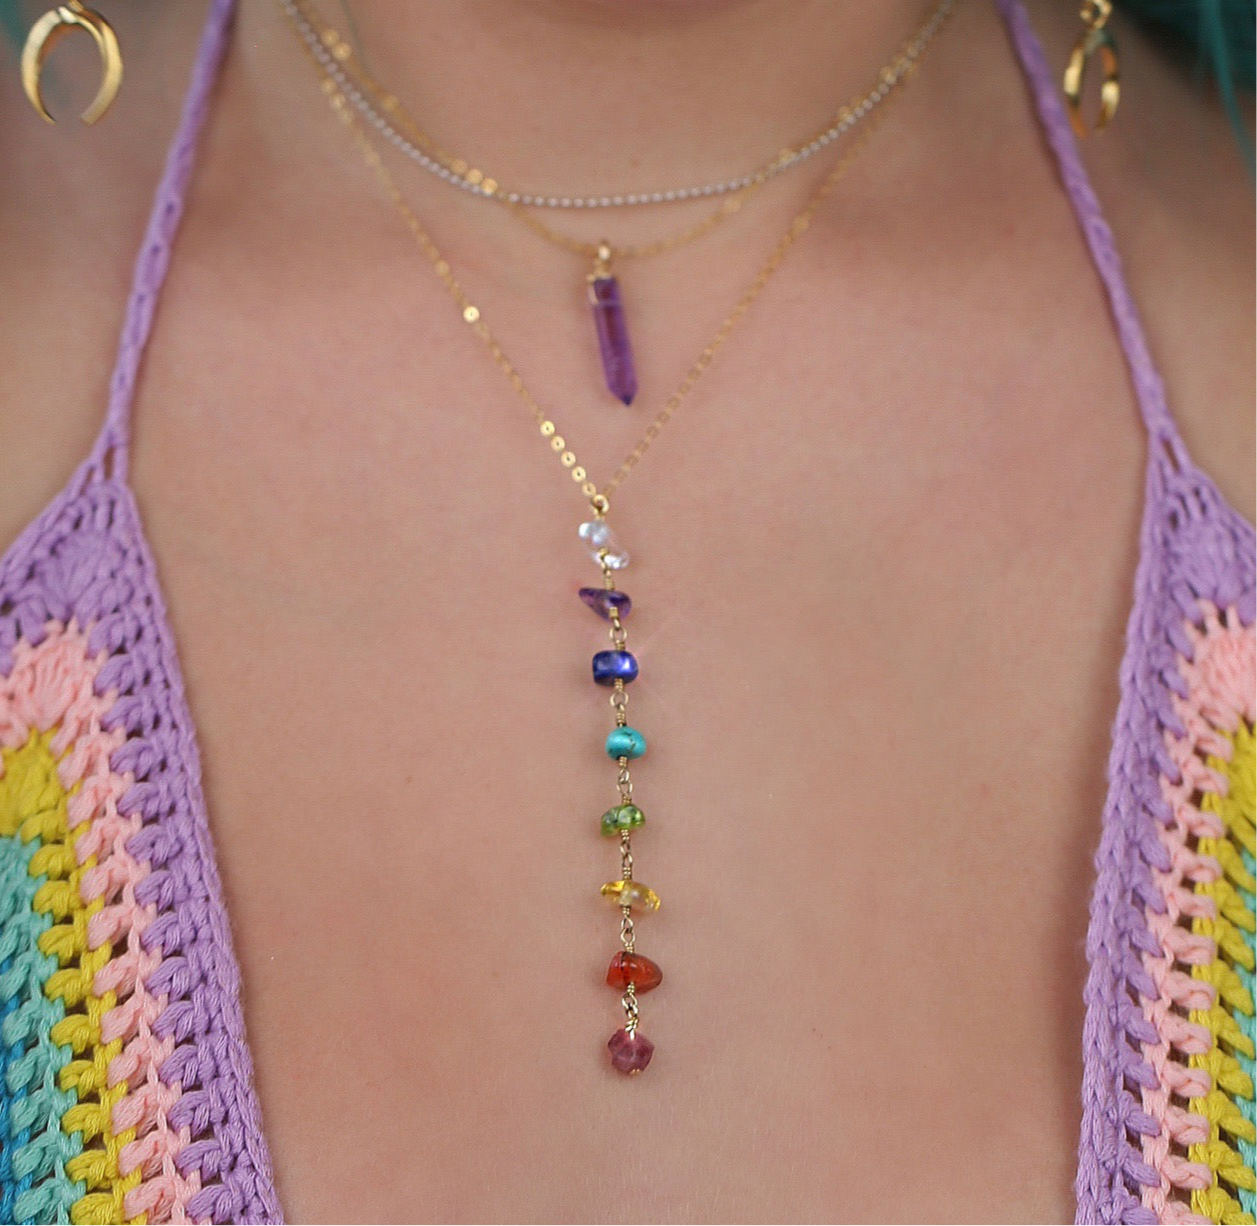 7 Chakra Necklace, Gemstone Necklace, Crystal Necklace, Statement Necklace, Rainbow Necklace, Yoga Gemstone Necklace, Chakra Stone Jewelry